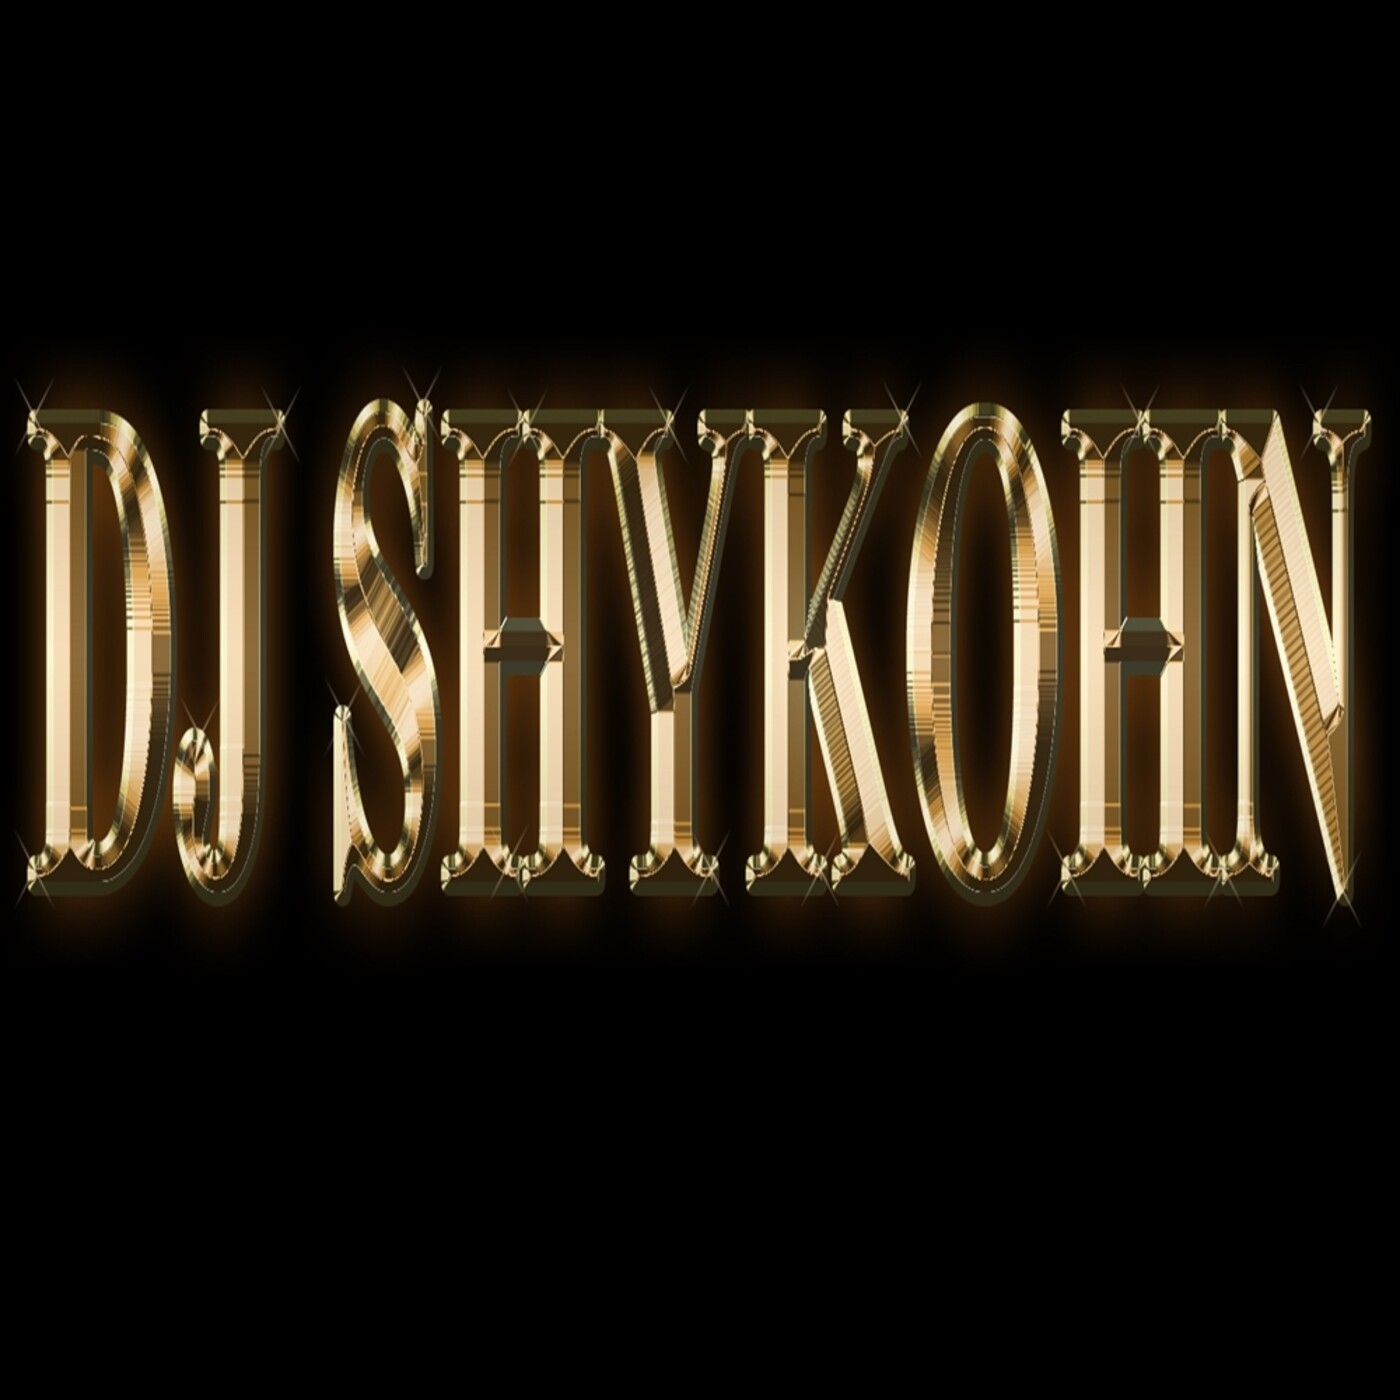 Remix reggaeton nuevo 2 - dj shykohn